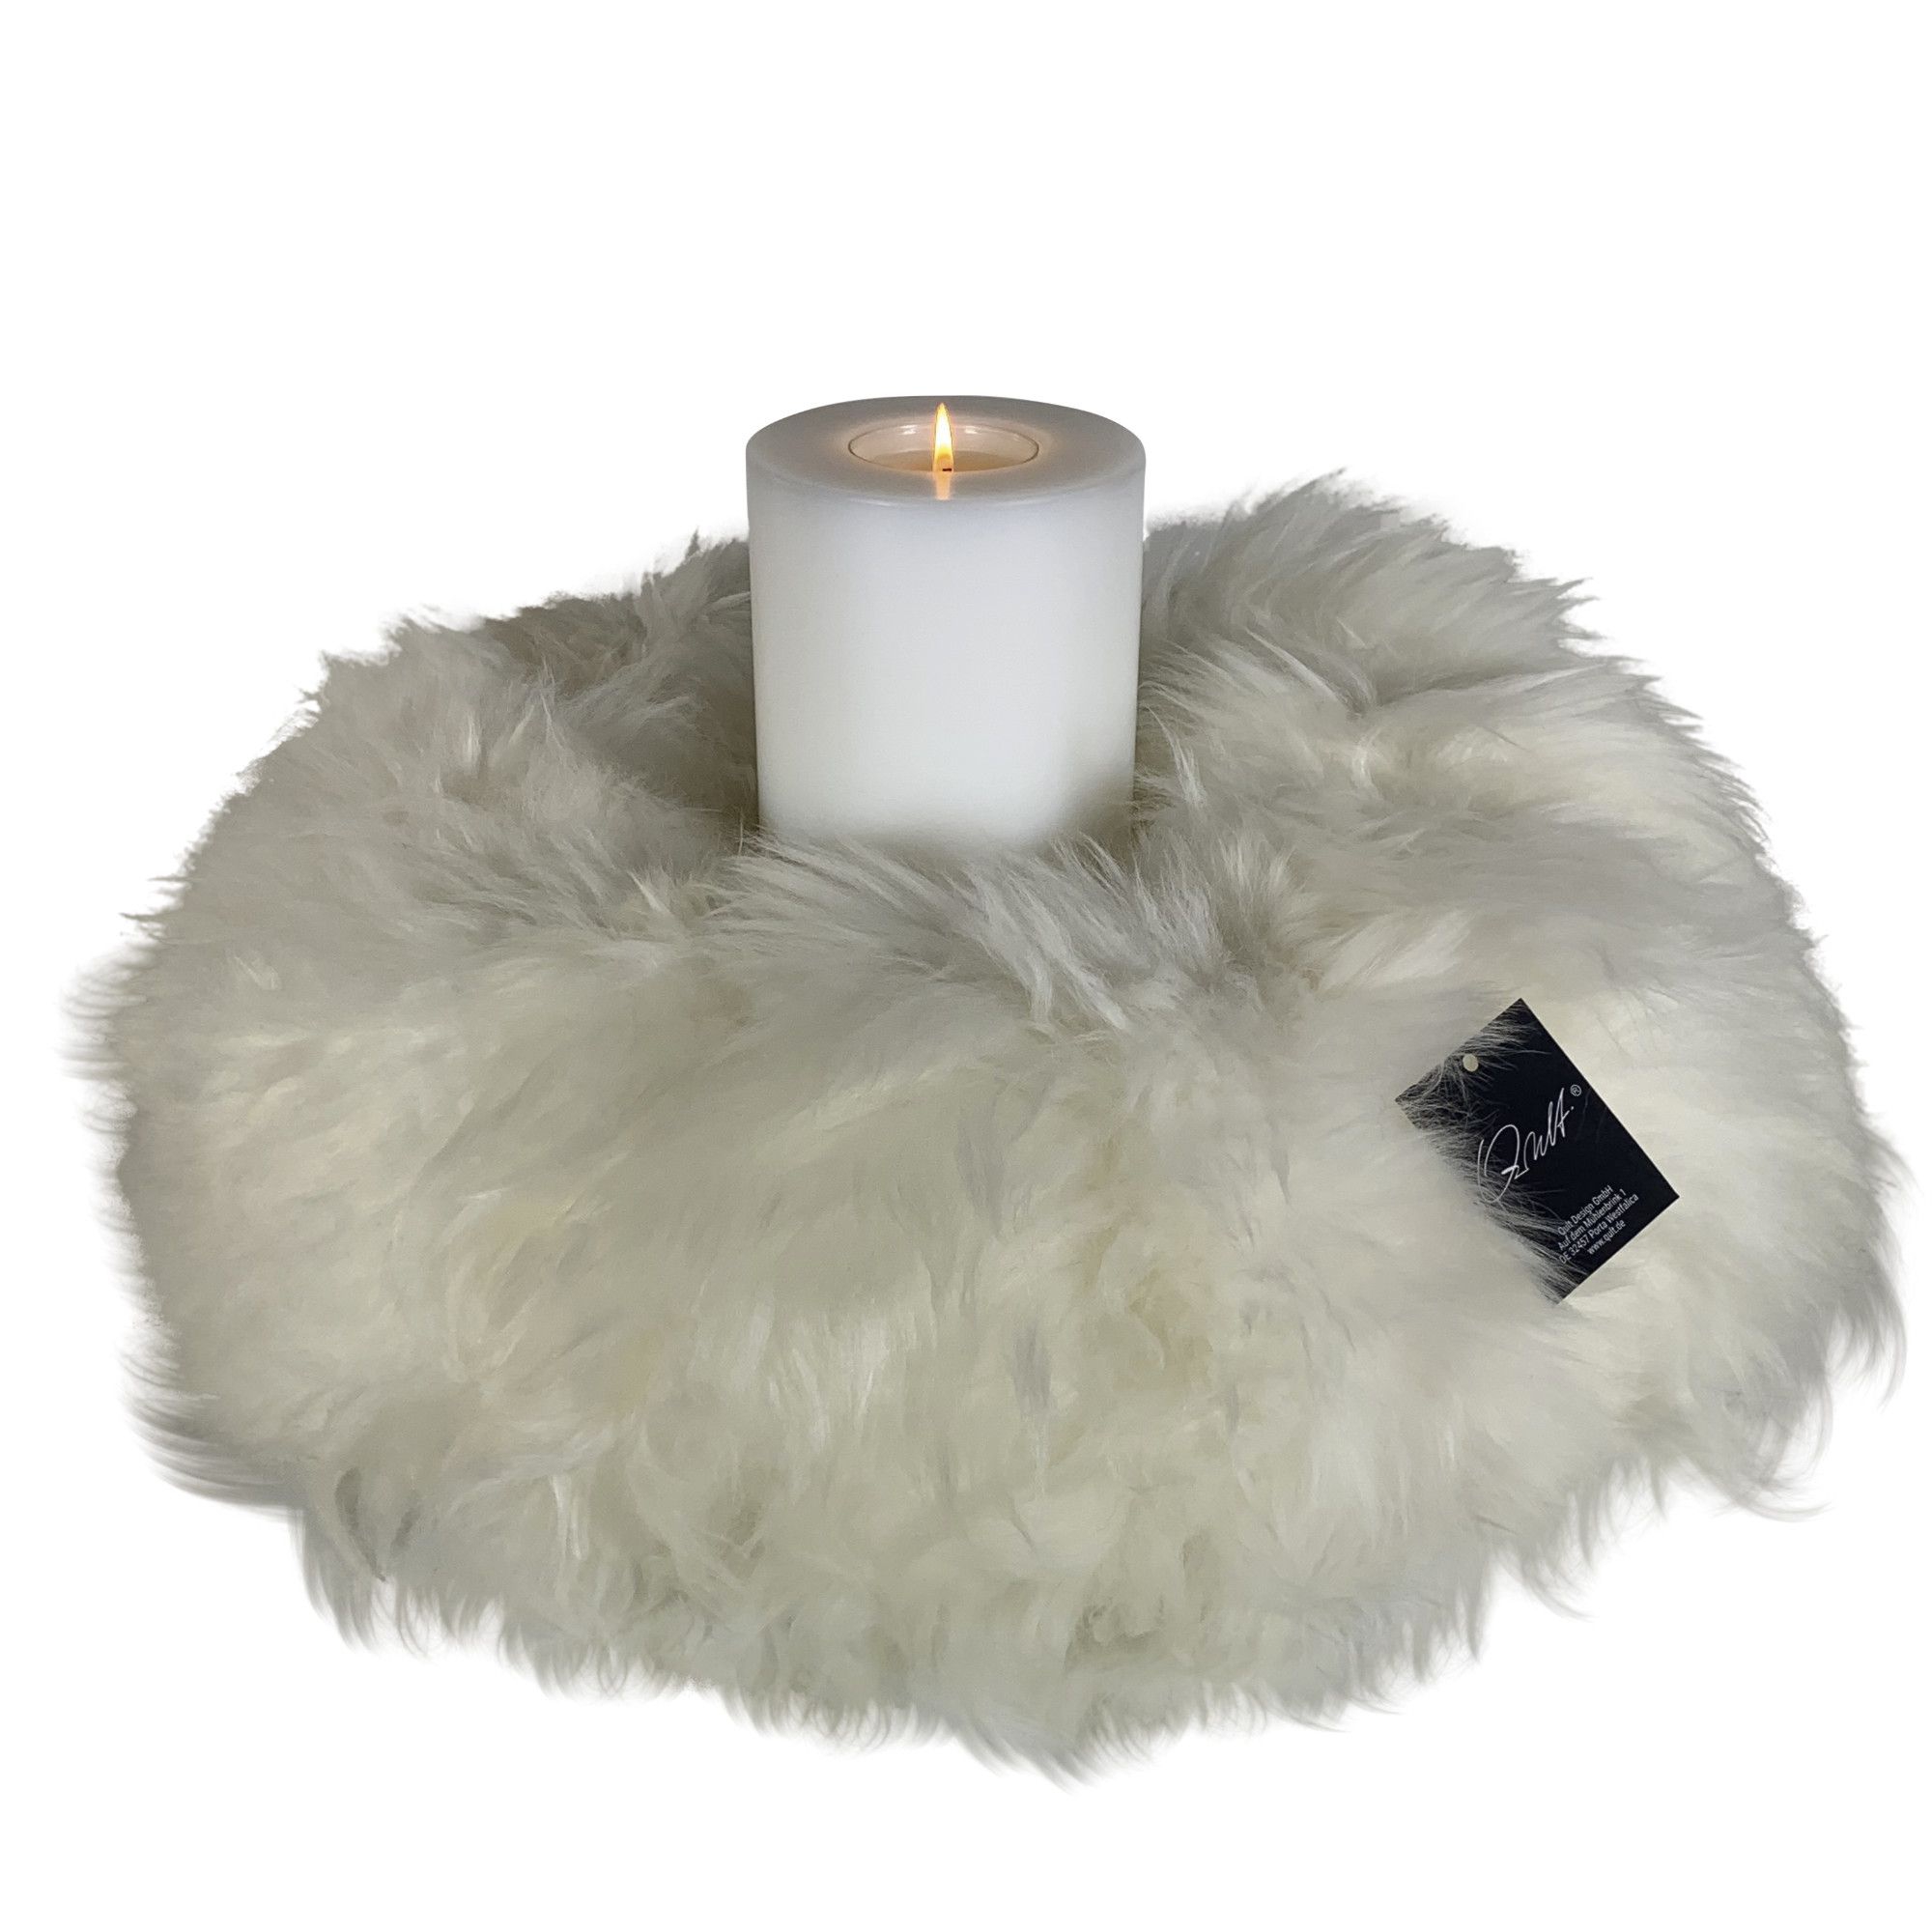 Qult Farluce Candle Real Fur - Merino Lamb Ivory - Candle wreath - Ø 45 cm x H Fur 10 cm